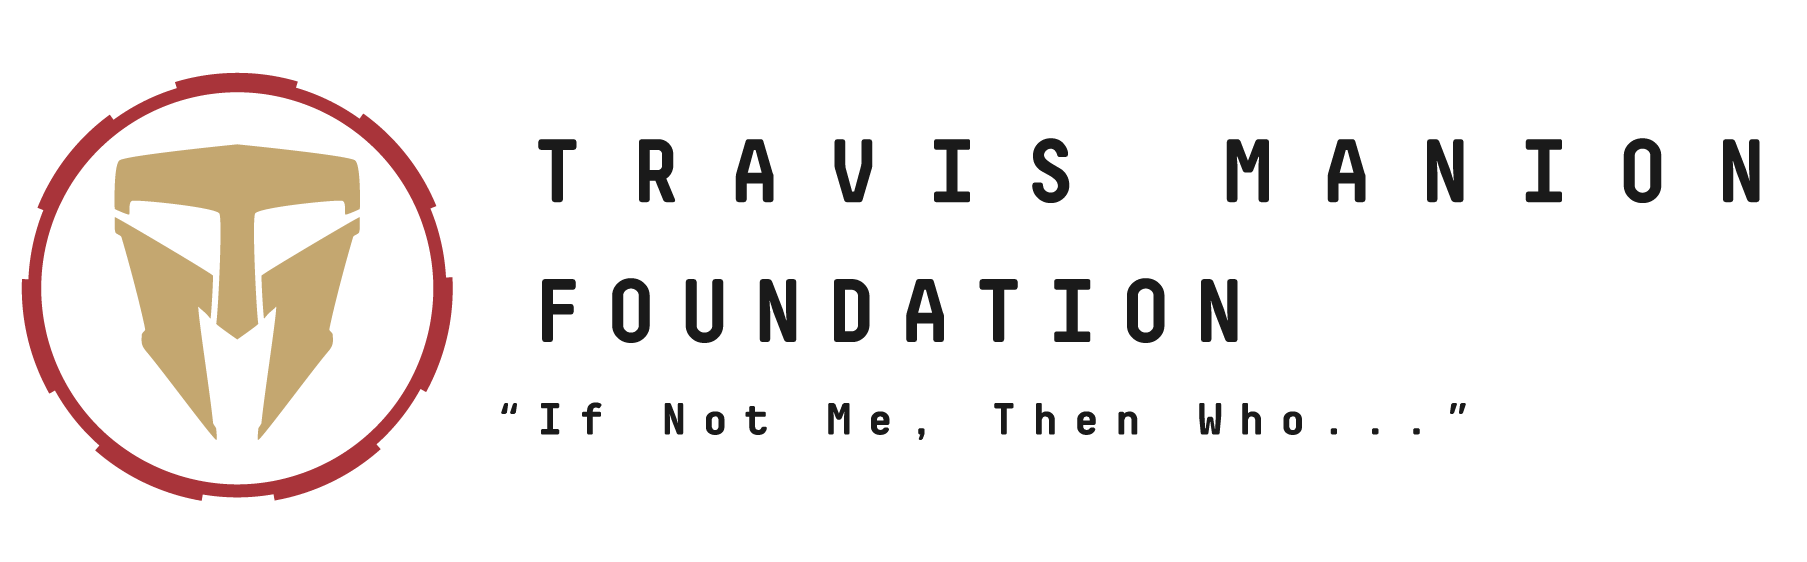 travis manion foundation logo ff branded